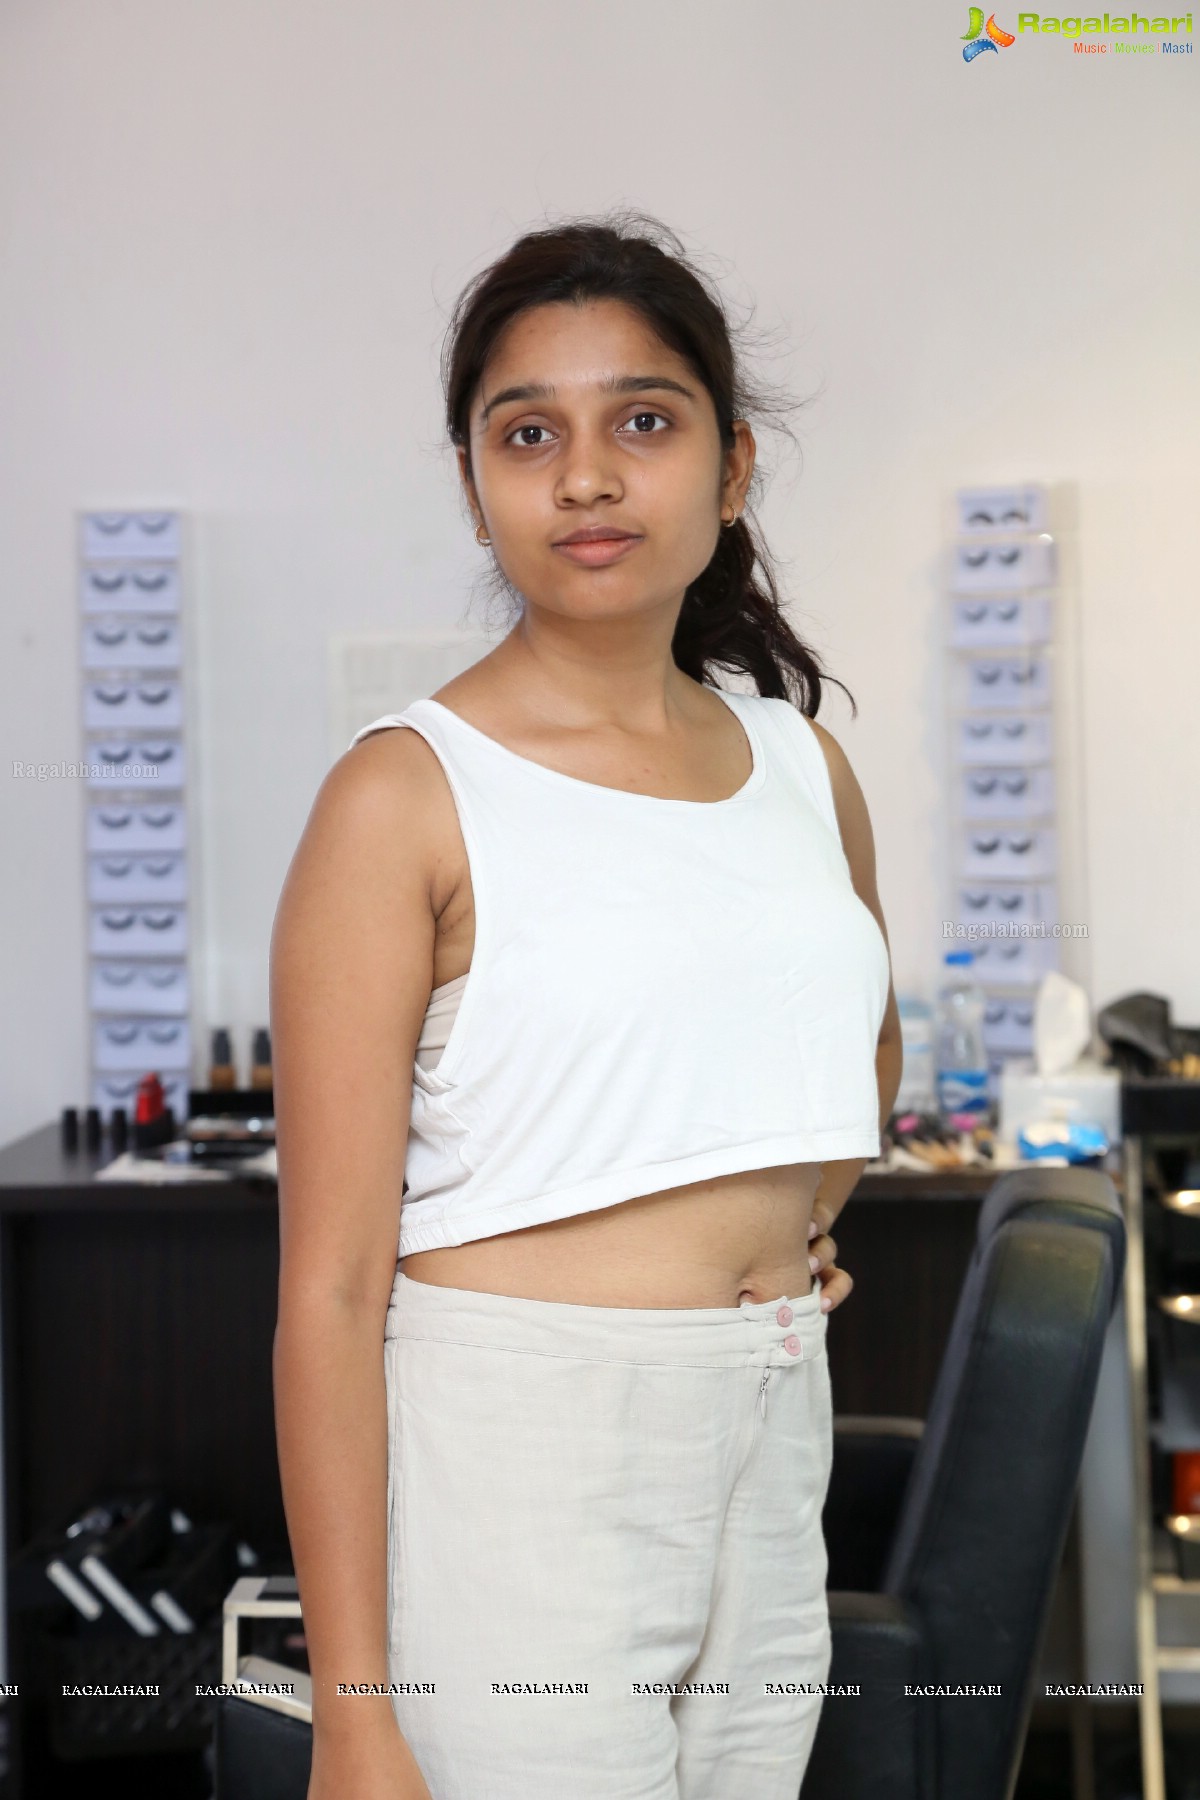 Shapes Style Lounge Presents Free Makeup Workshop at Kondapur